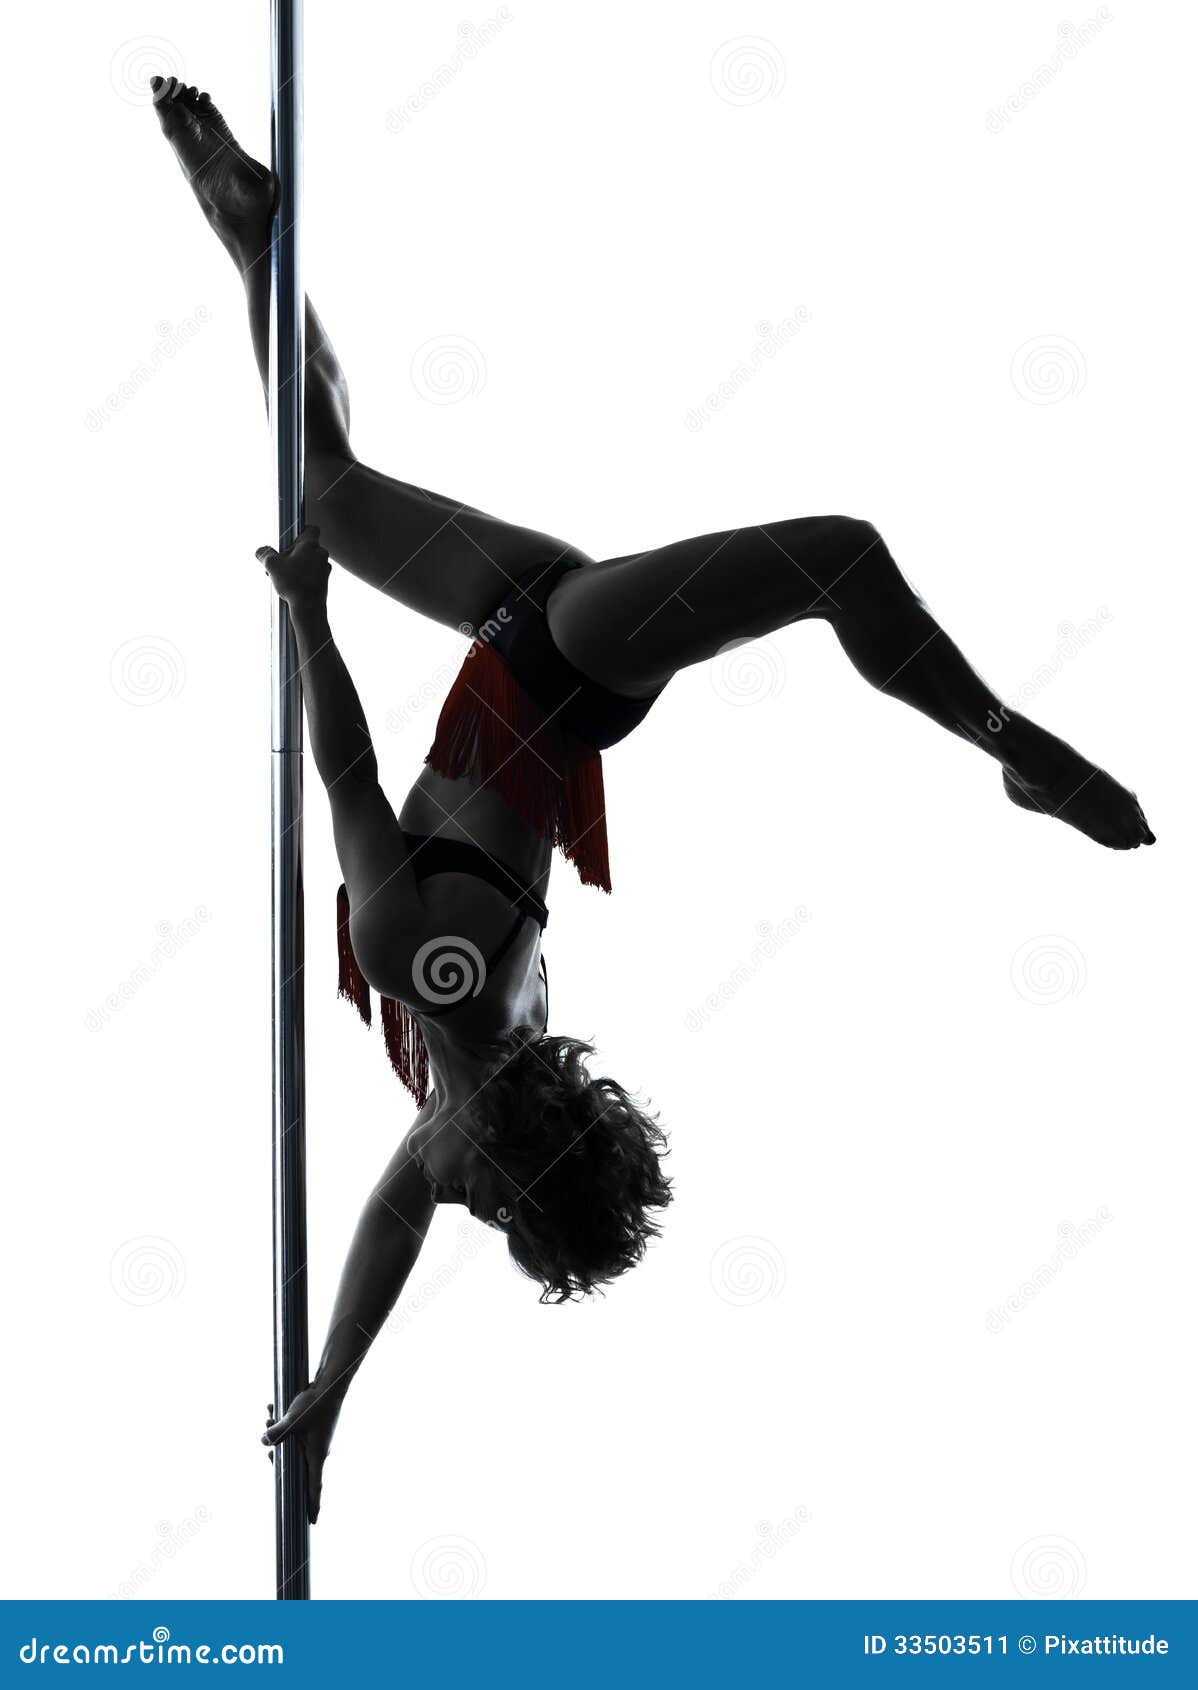 clipart pole dance - photo #15